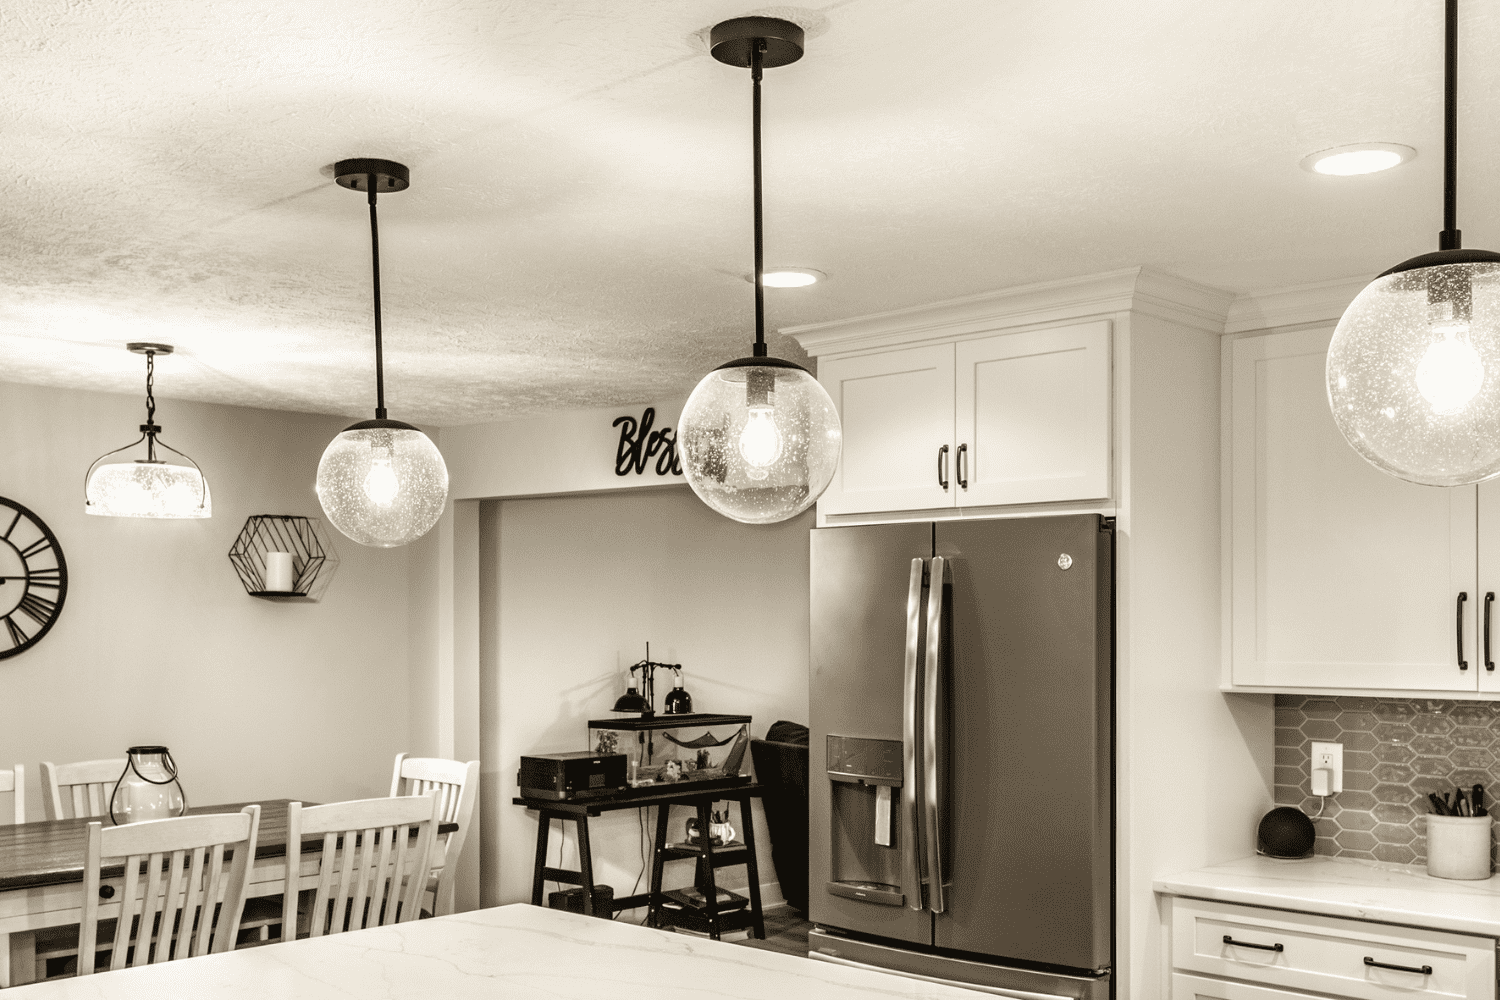 Nicholas Design Build | A black and white photo of a neutral kitchen.